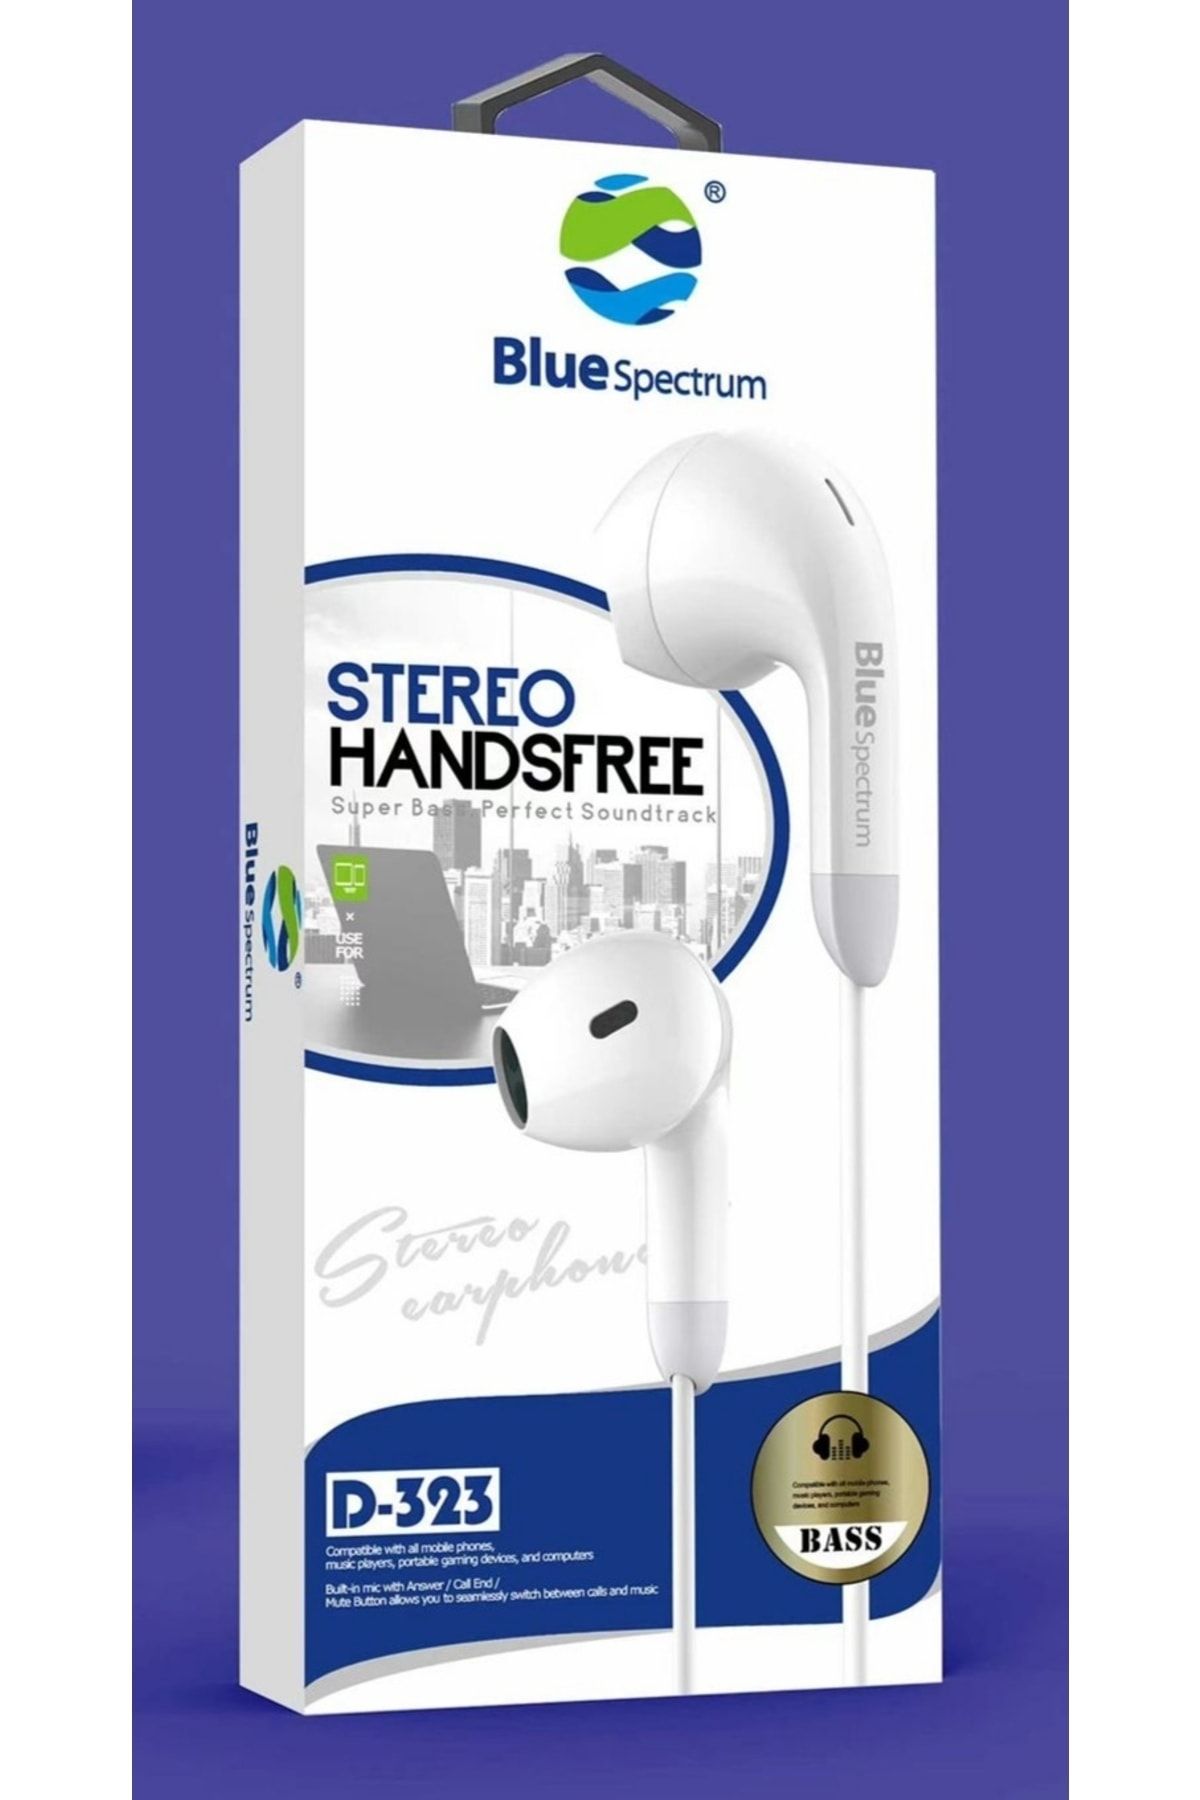 BLUE SPECTRUM D-323 Stereo Handsfree Kulaklık